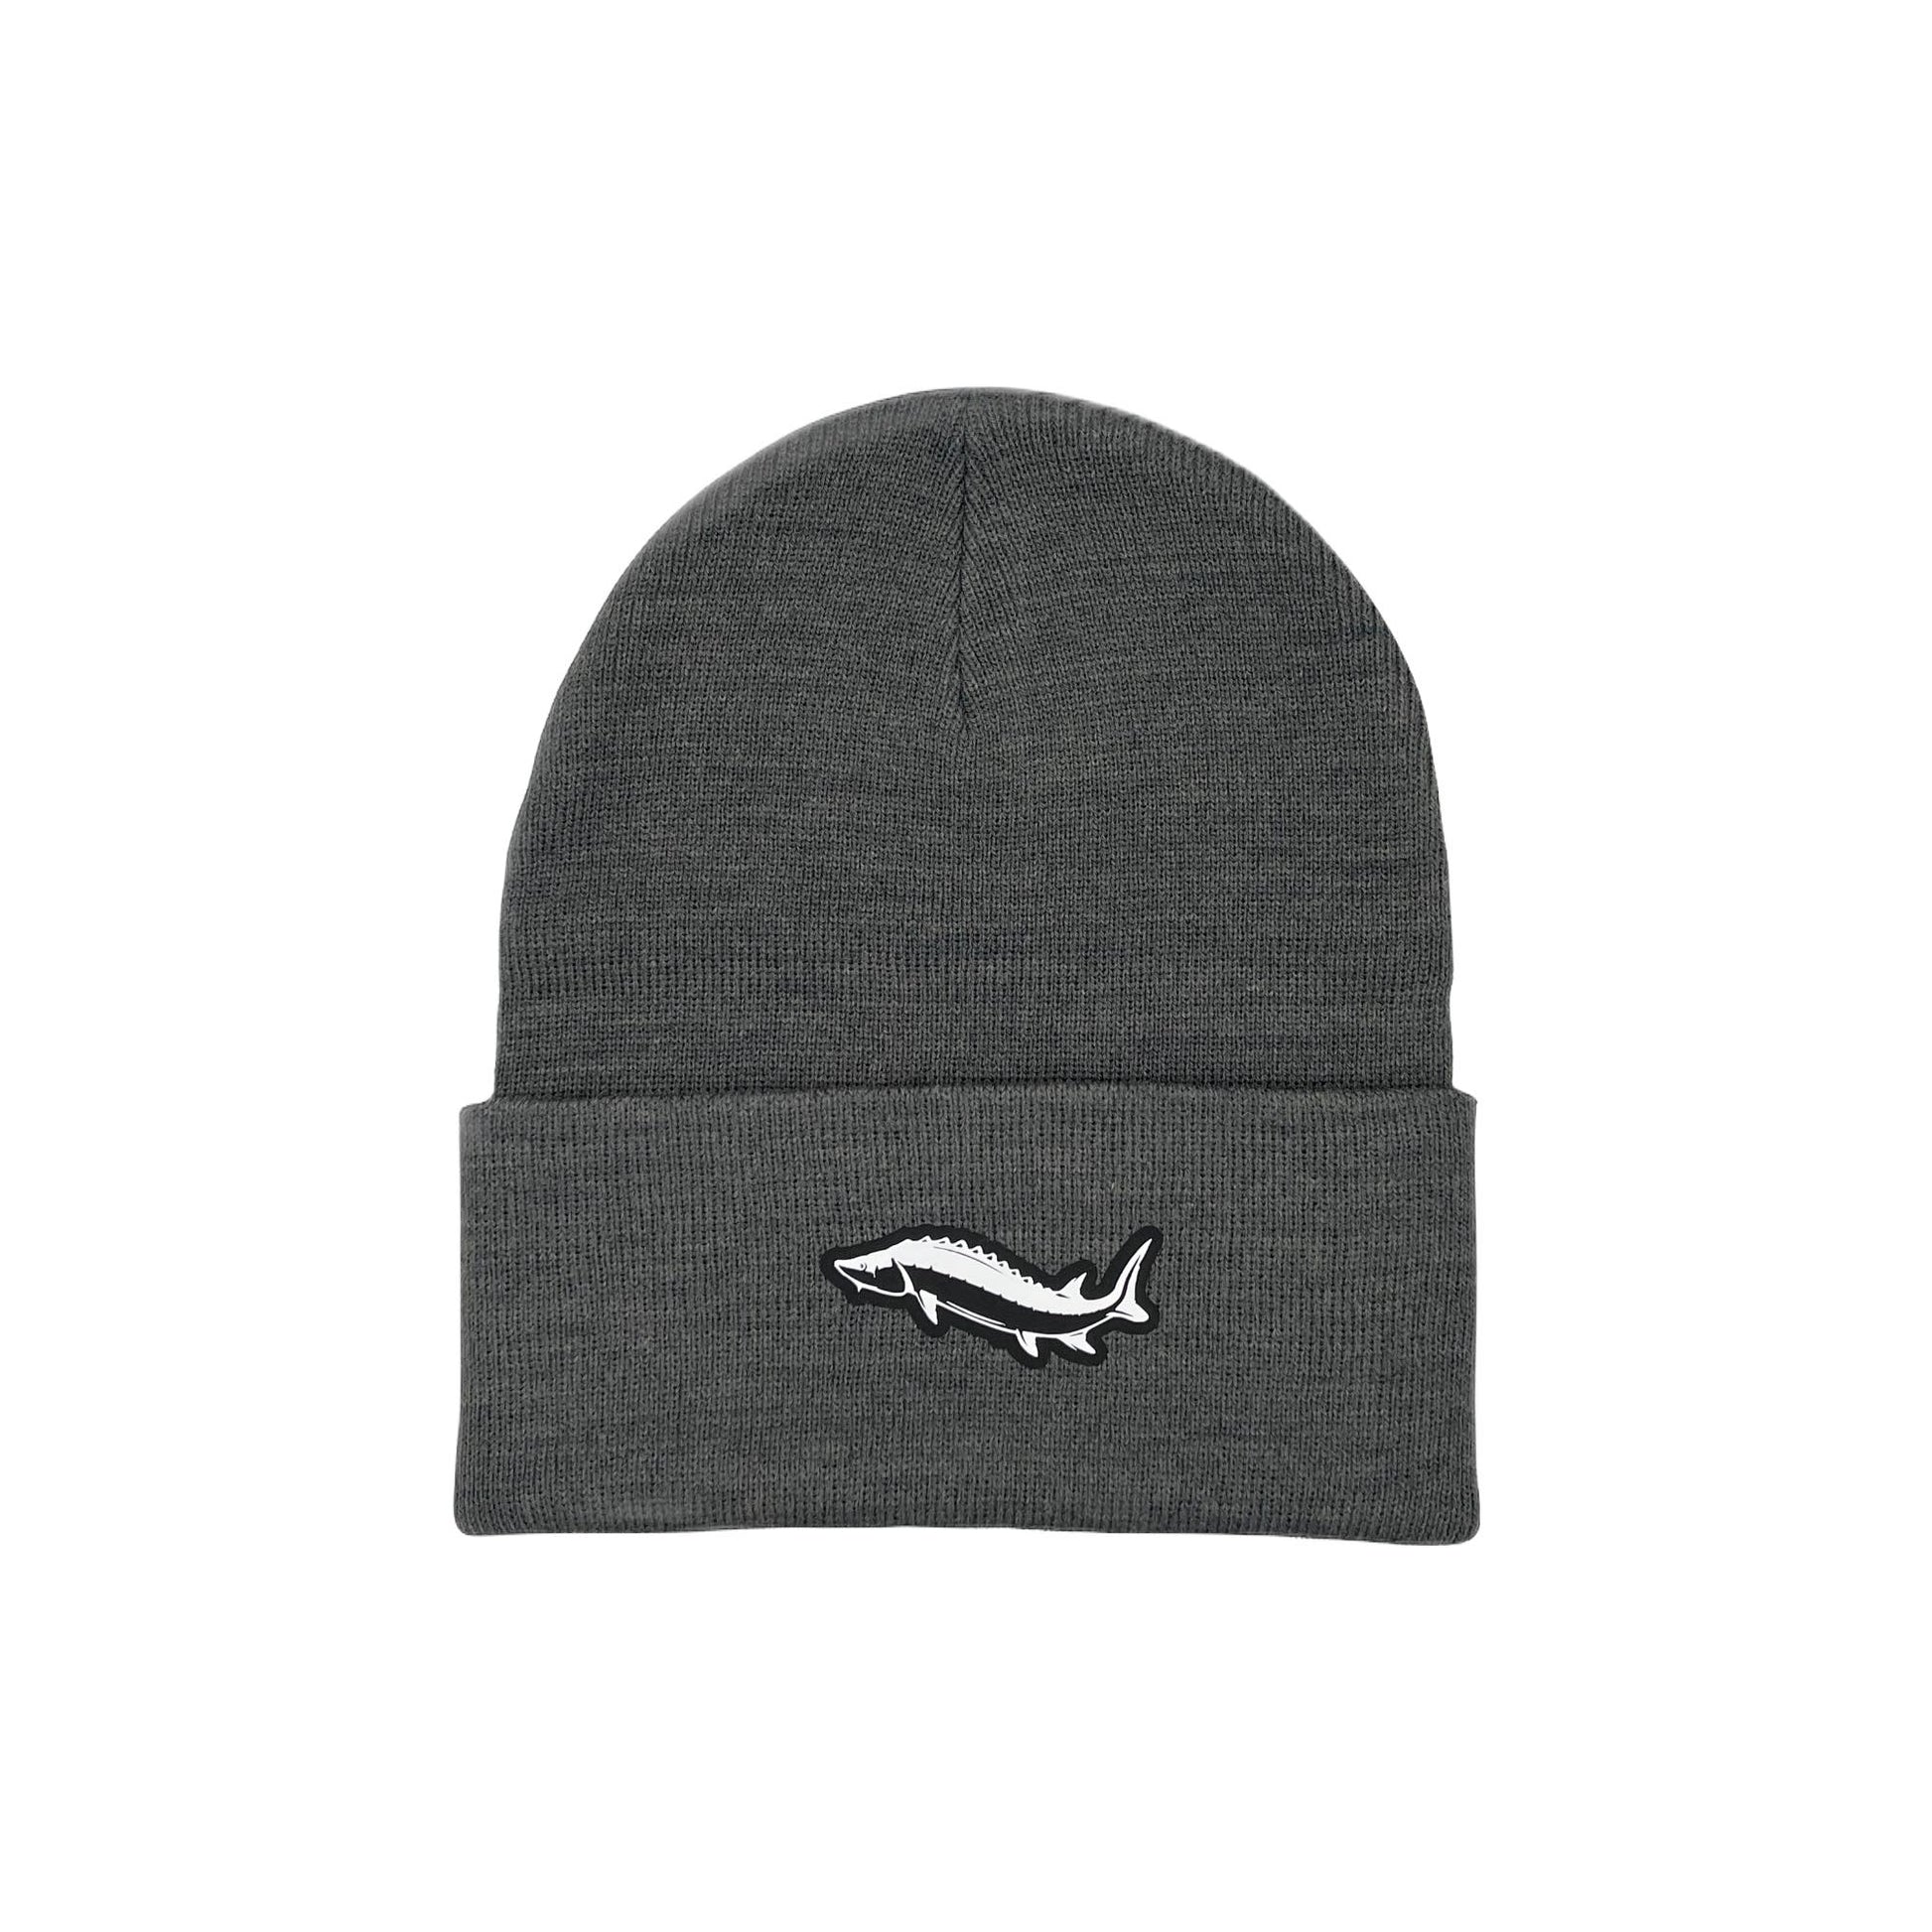 Sturgeon Dark Gray Winter Cuffed Knit Hat, Fish, Fishing, Beanie